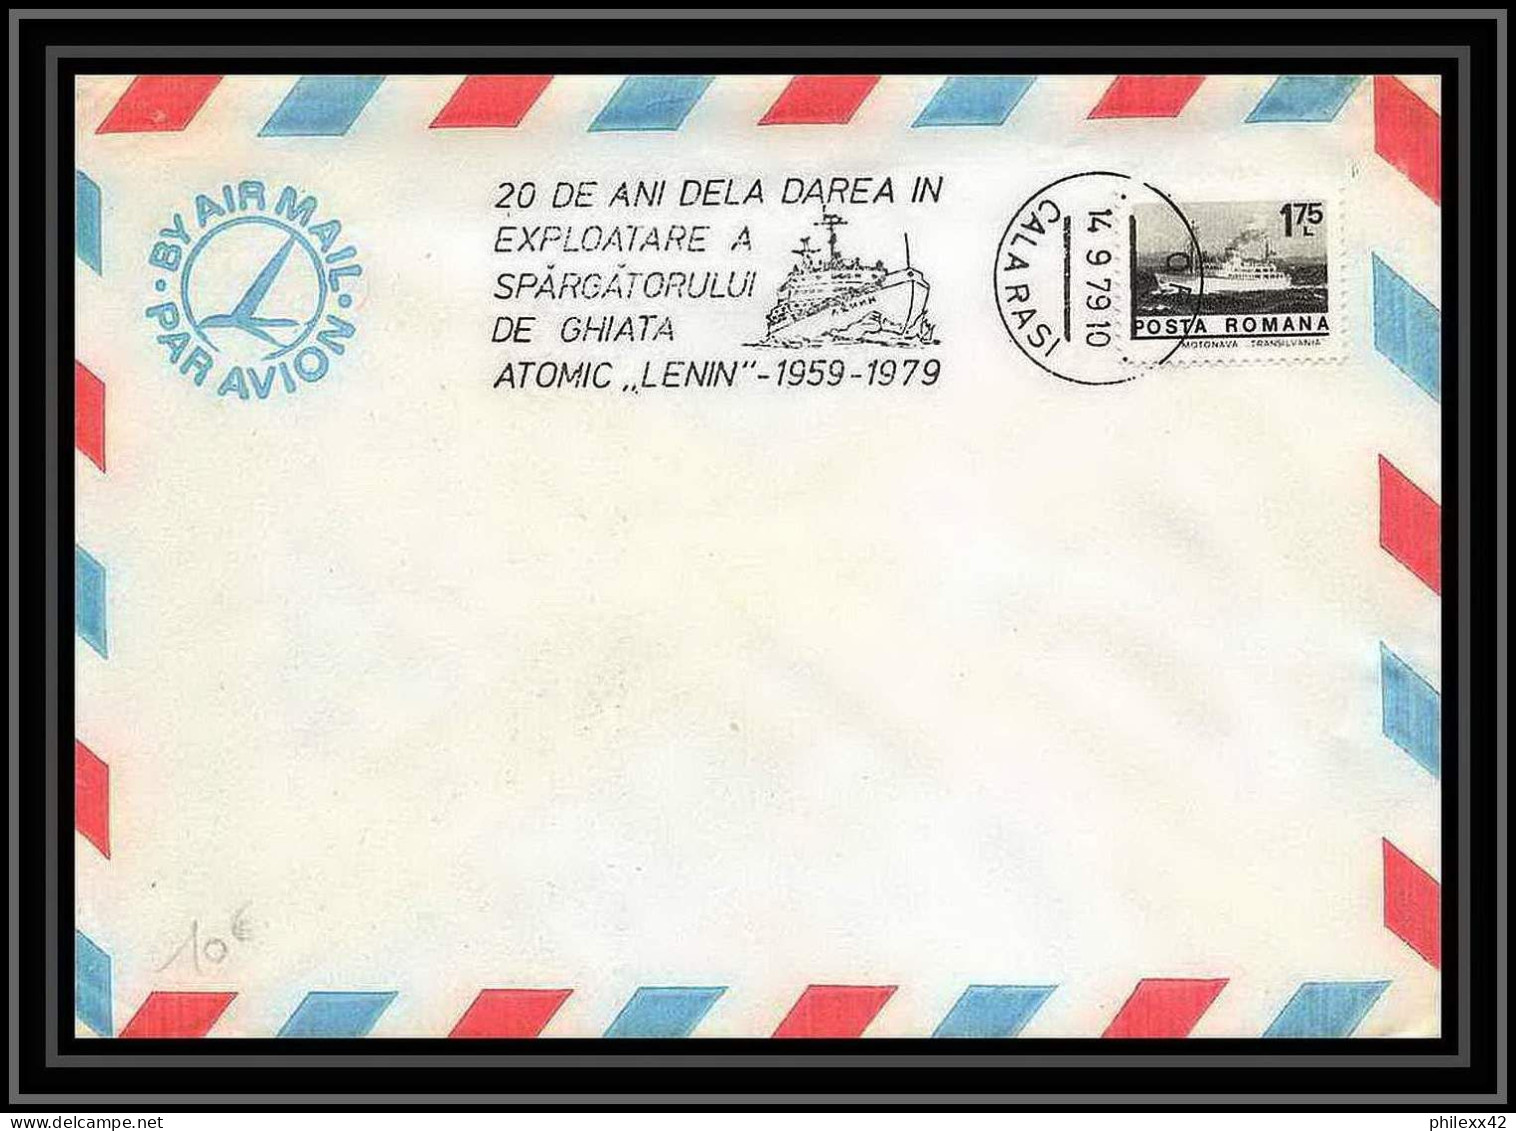 2017 Roumanie (Romania) Lettre (cover) Spargatorului Ghiata Atomic Lenin 14/9/1979  - Bases Antarctiques